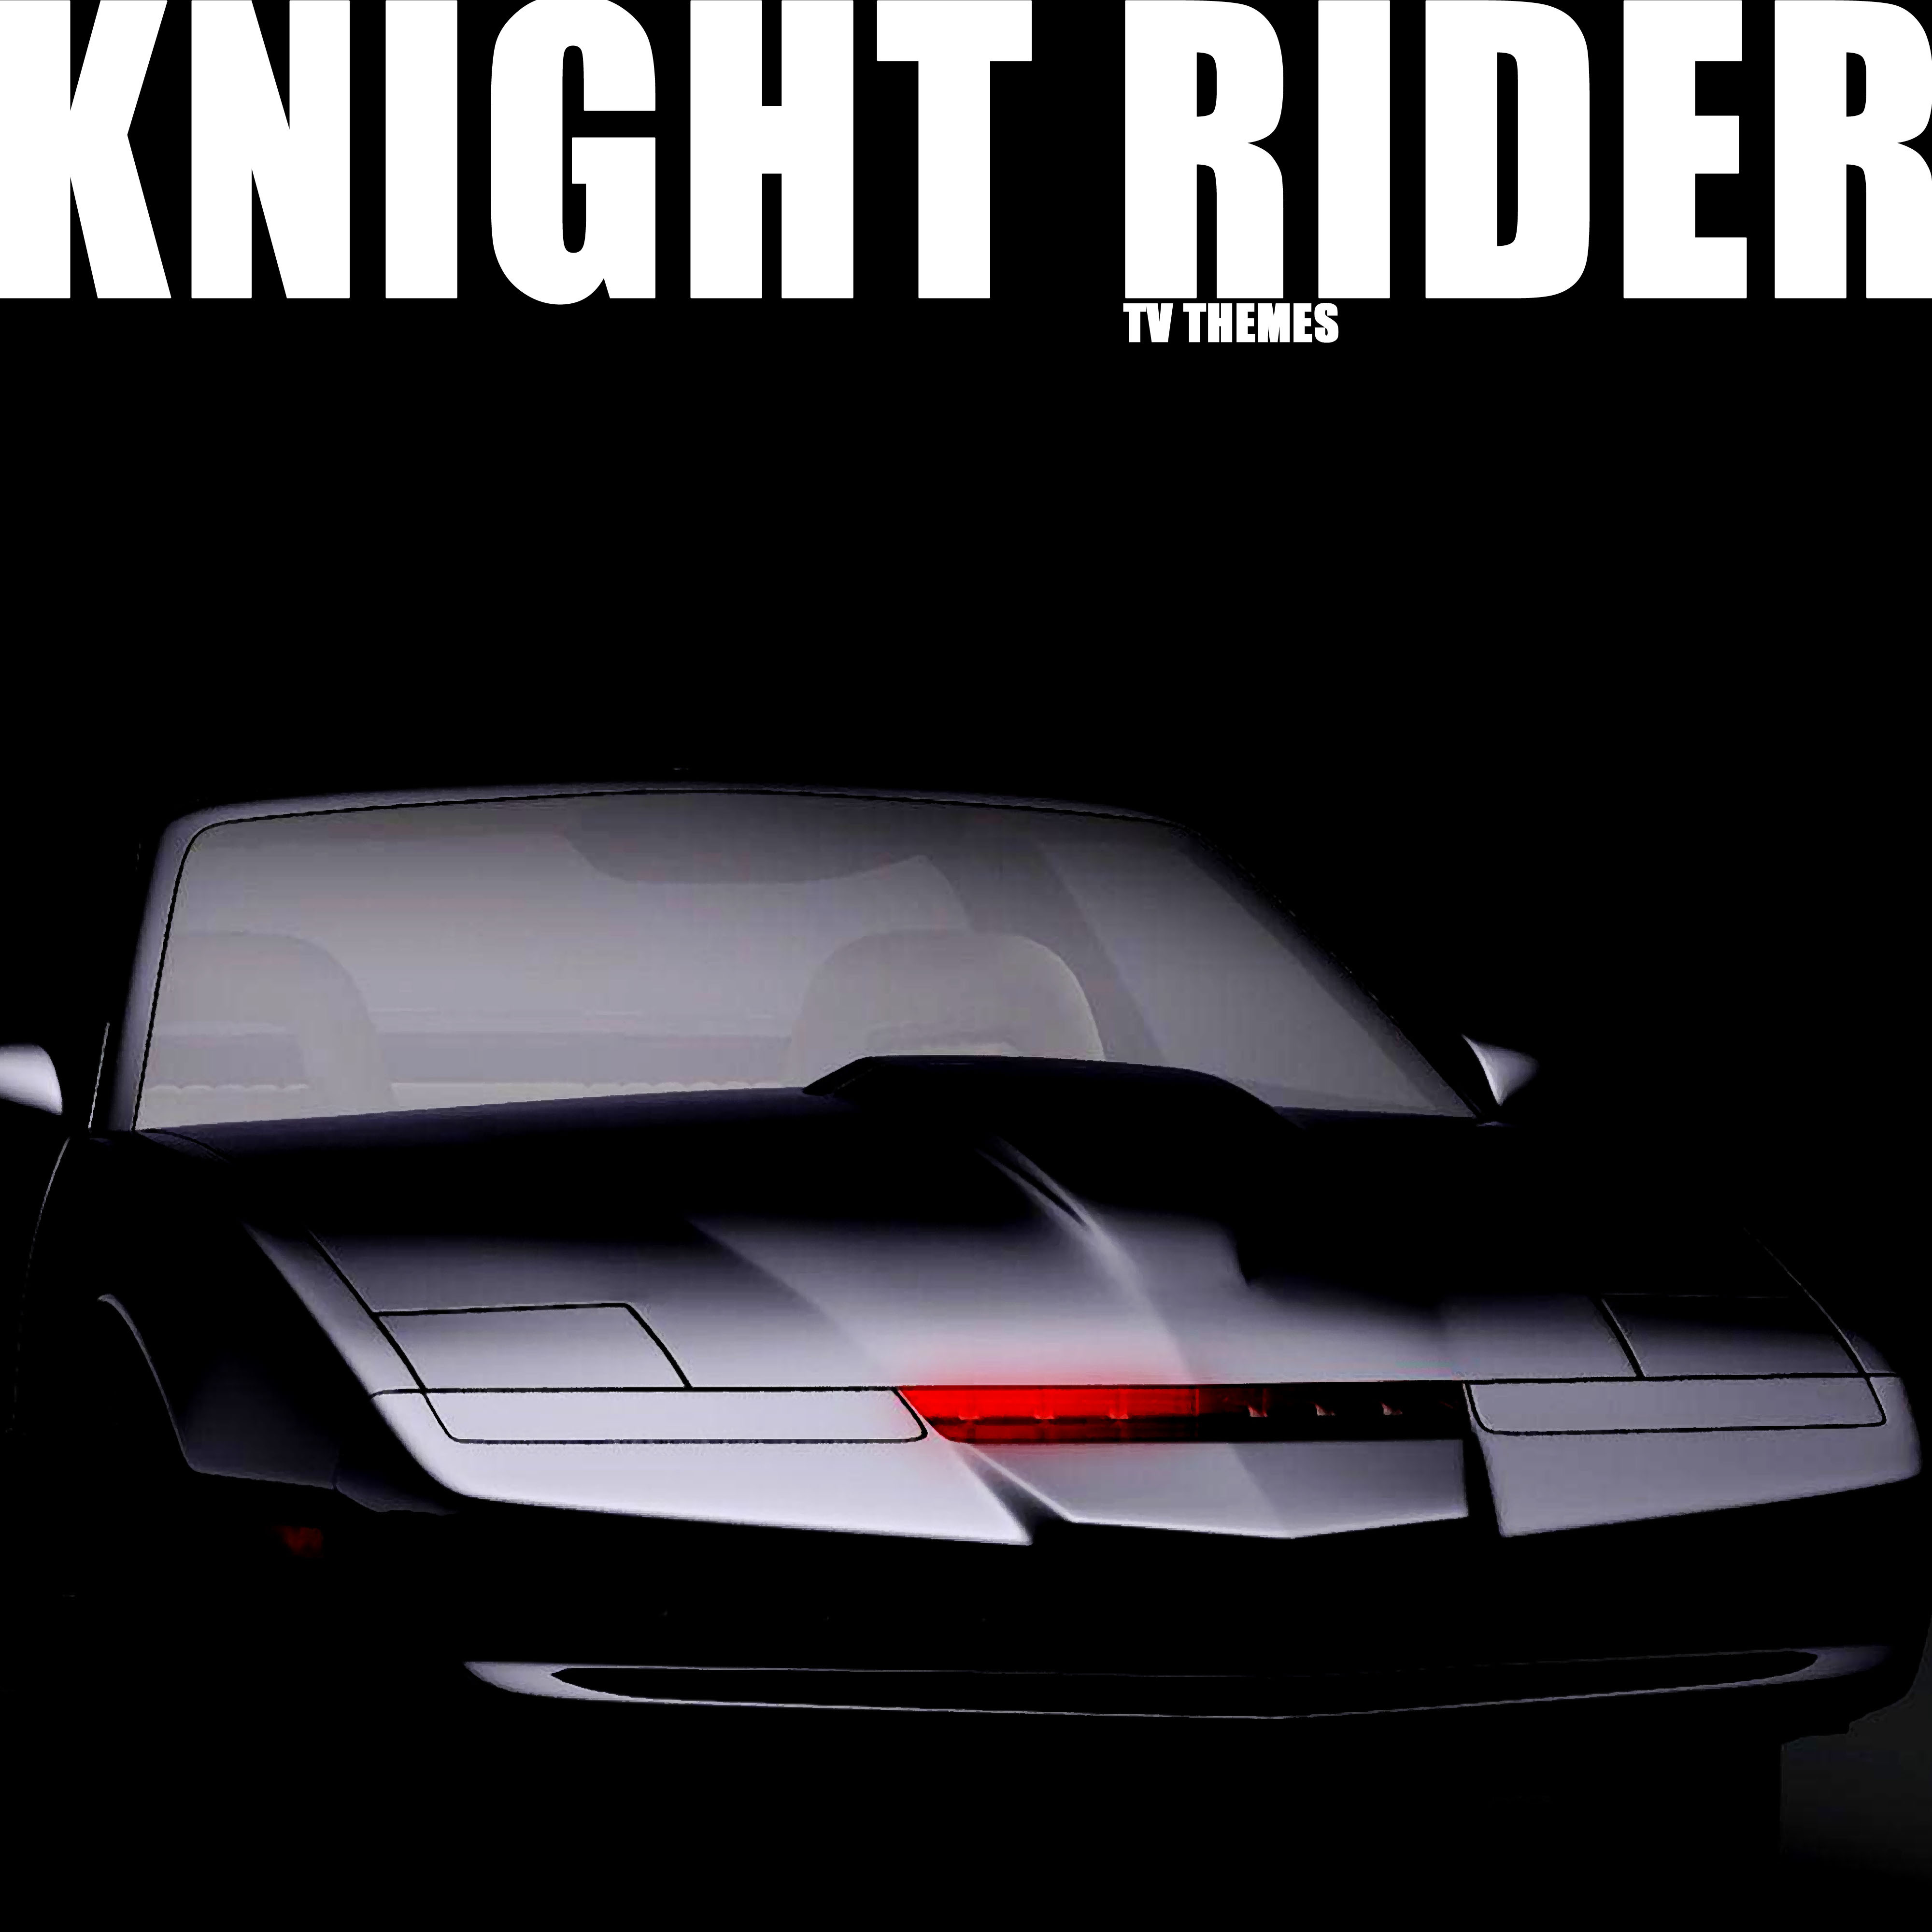 Knight Rider - The Theme Music